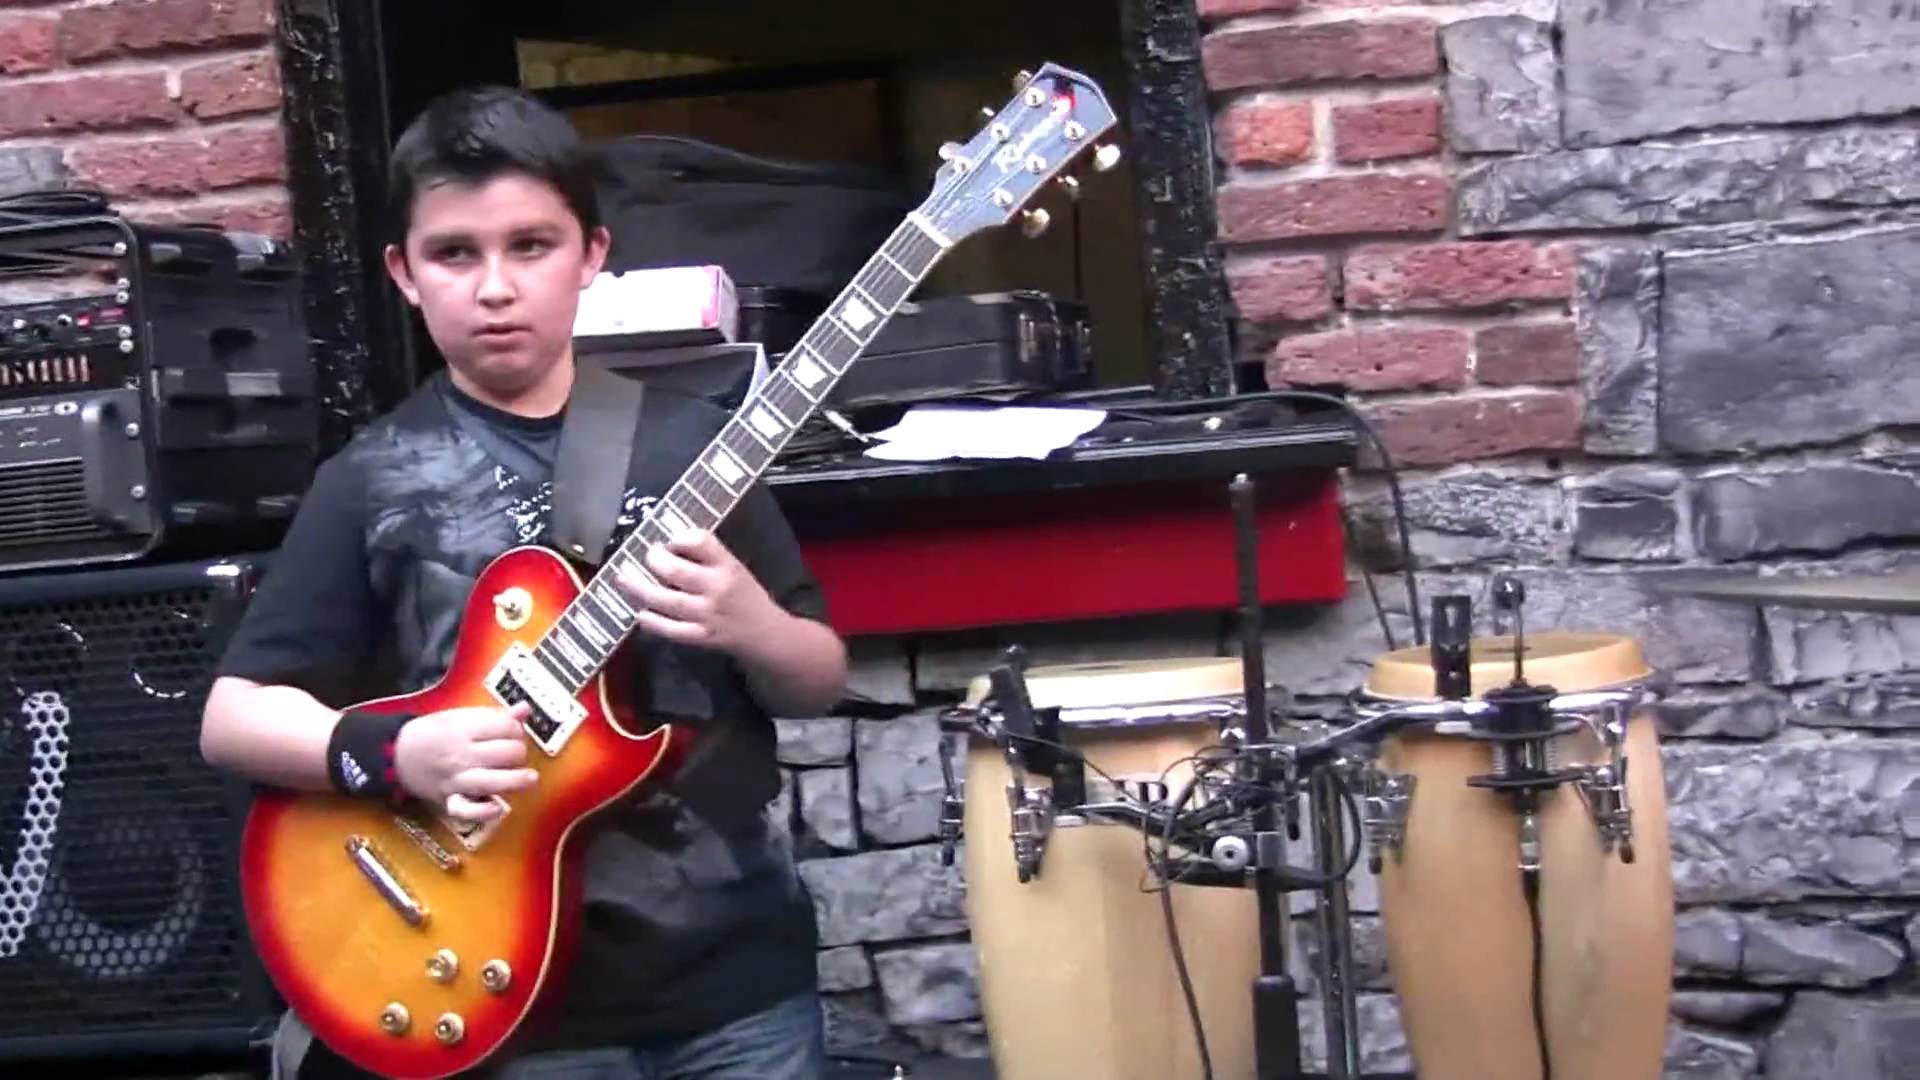 12-year-old Andreas Varady, jazz guitarist